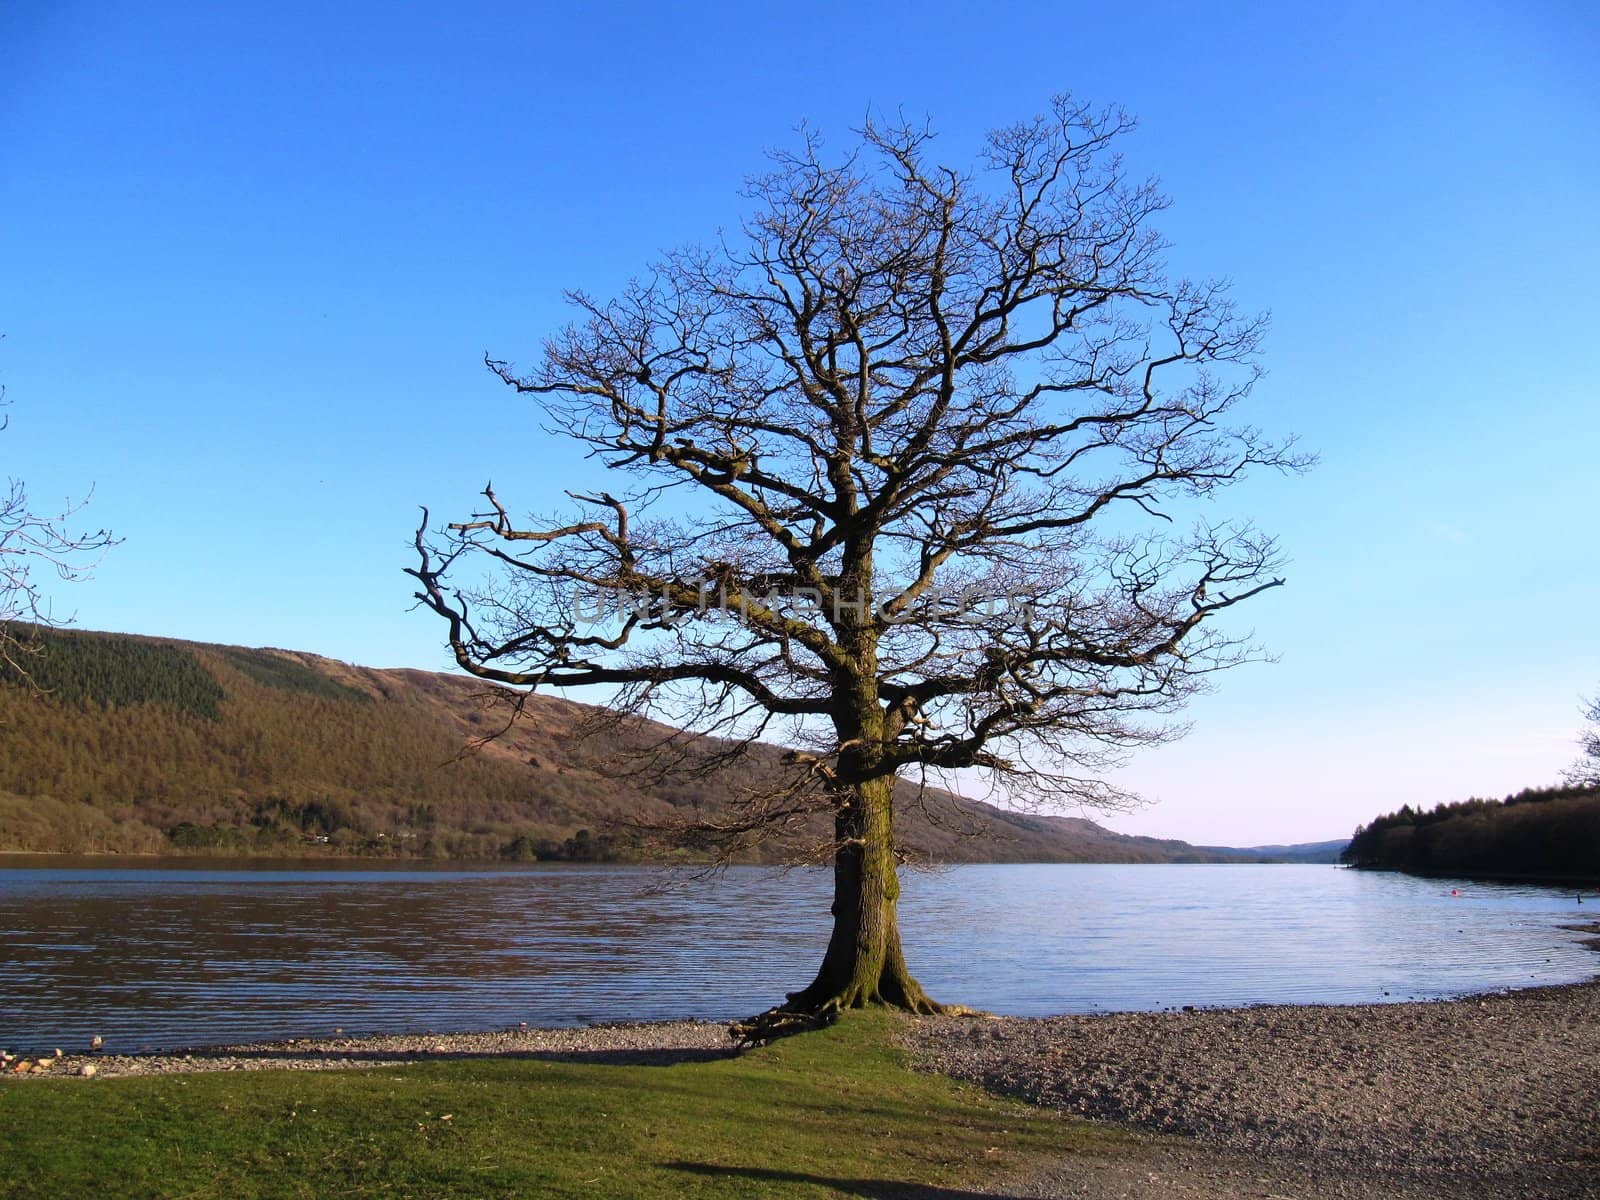 Tree by a lake, lakeside